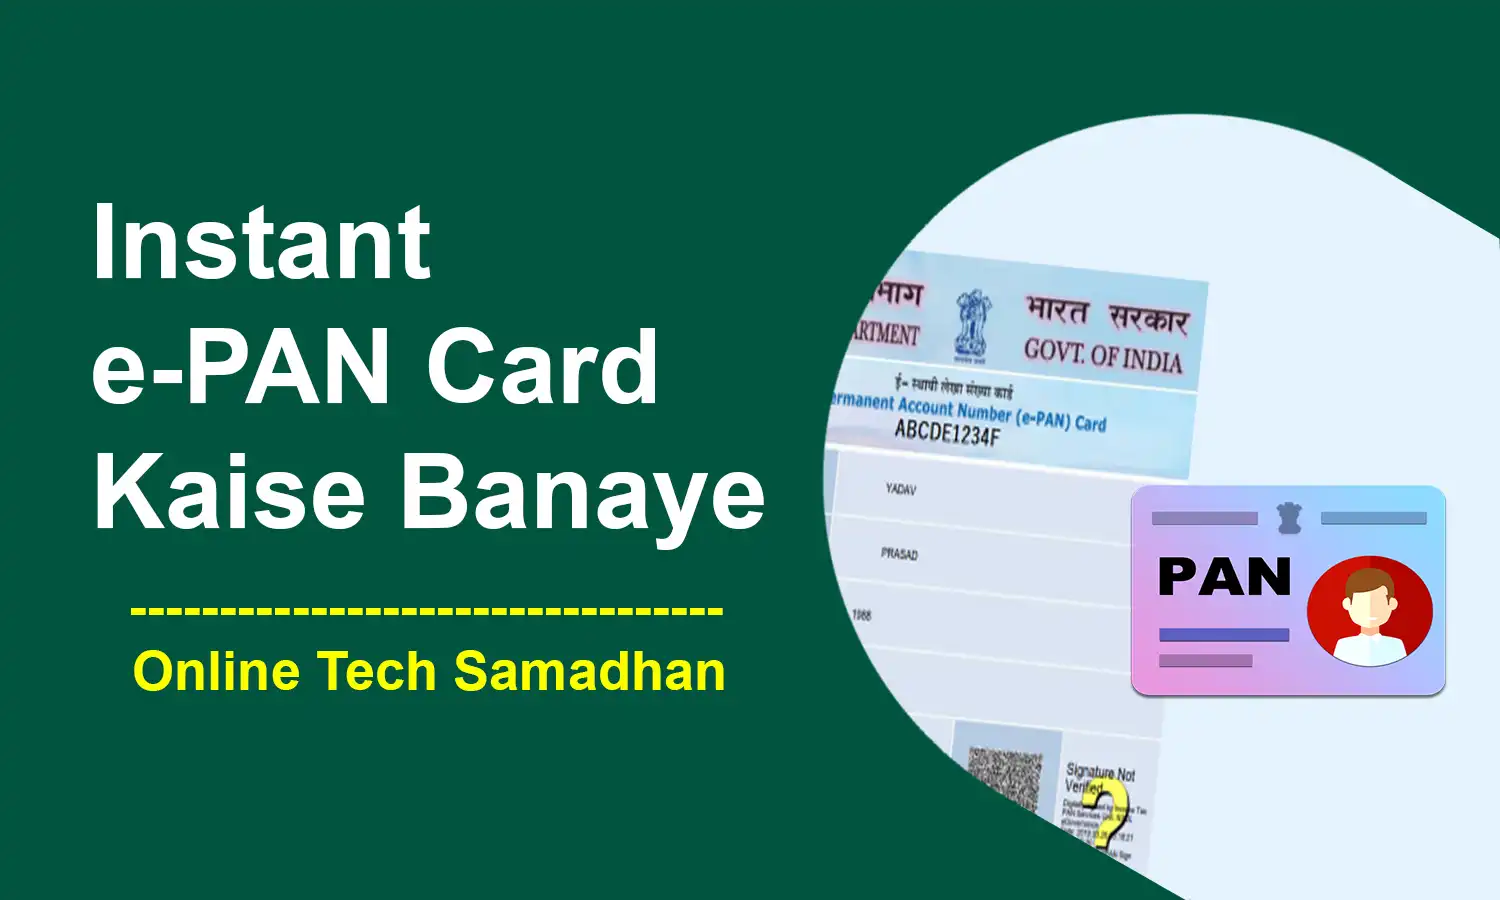 Instant e-PAN Card Kaise Banaye